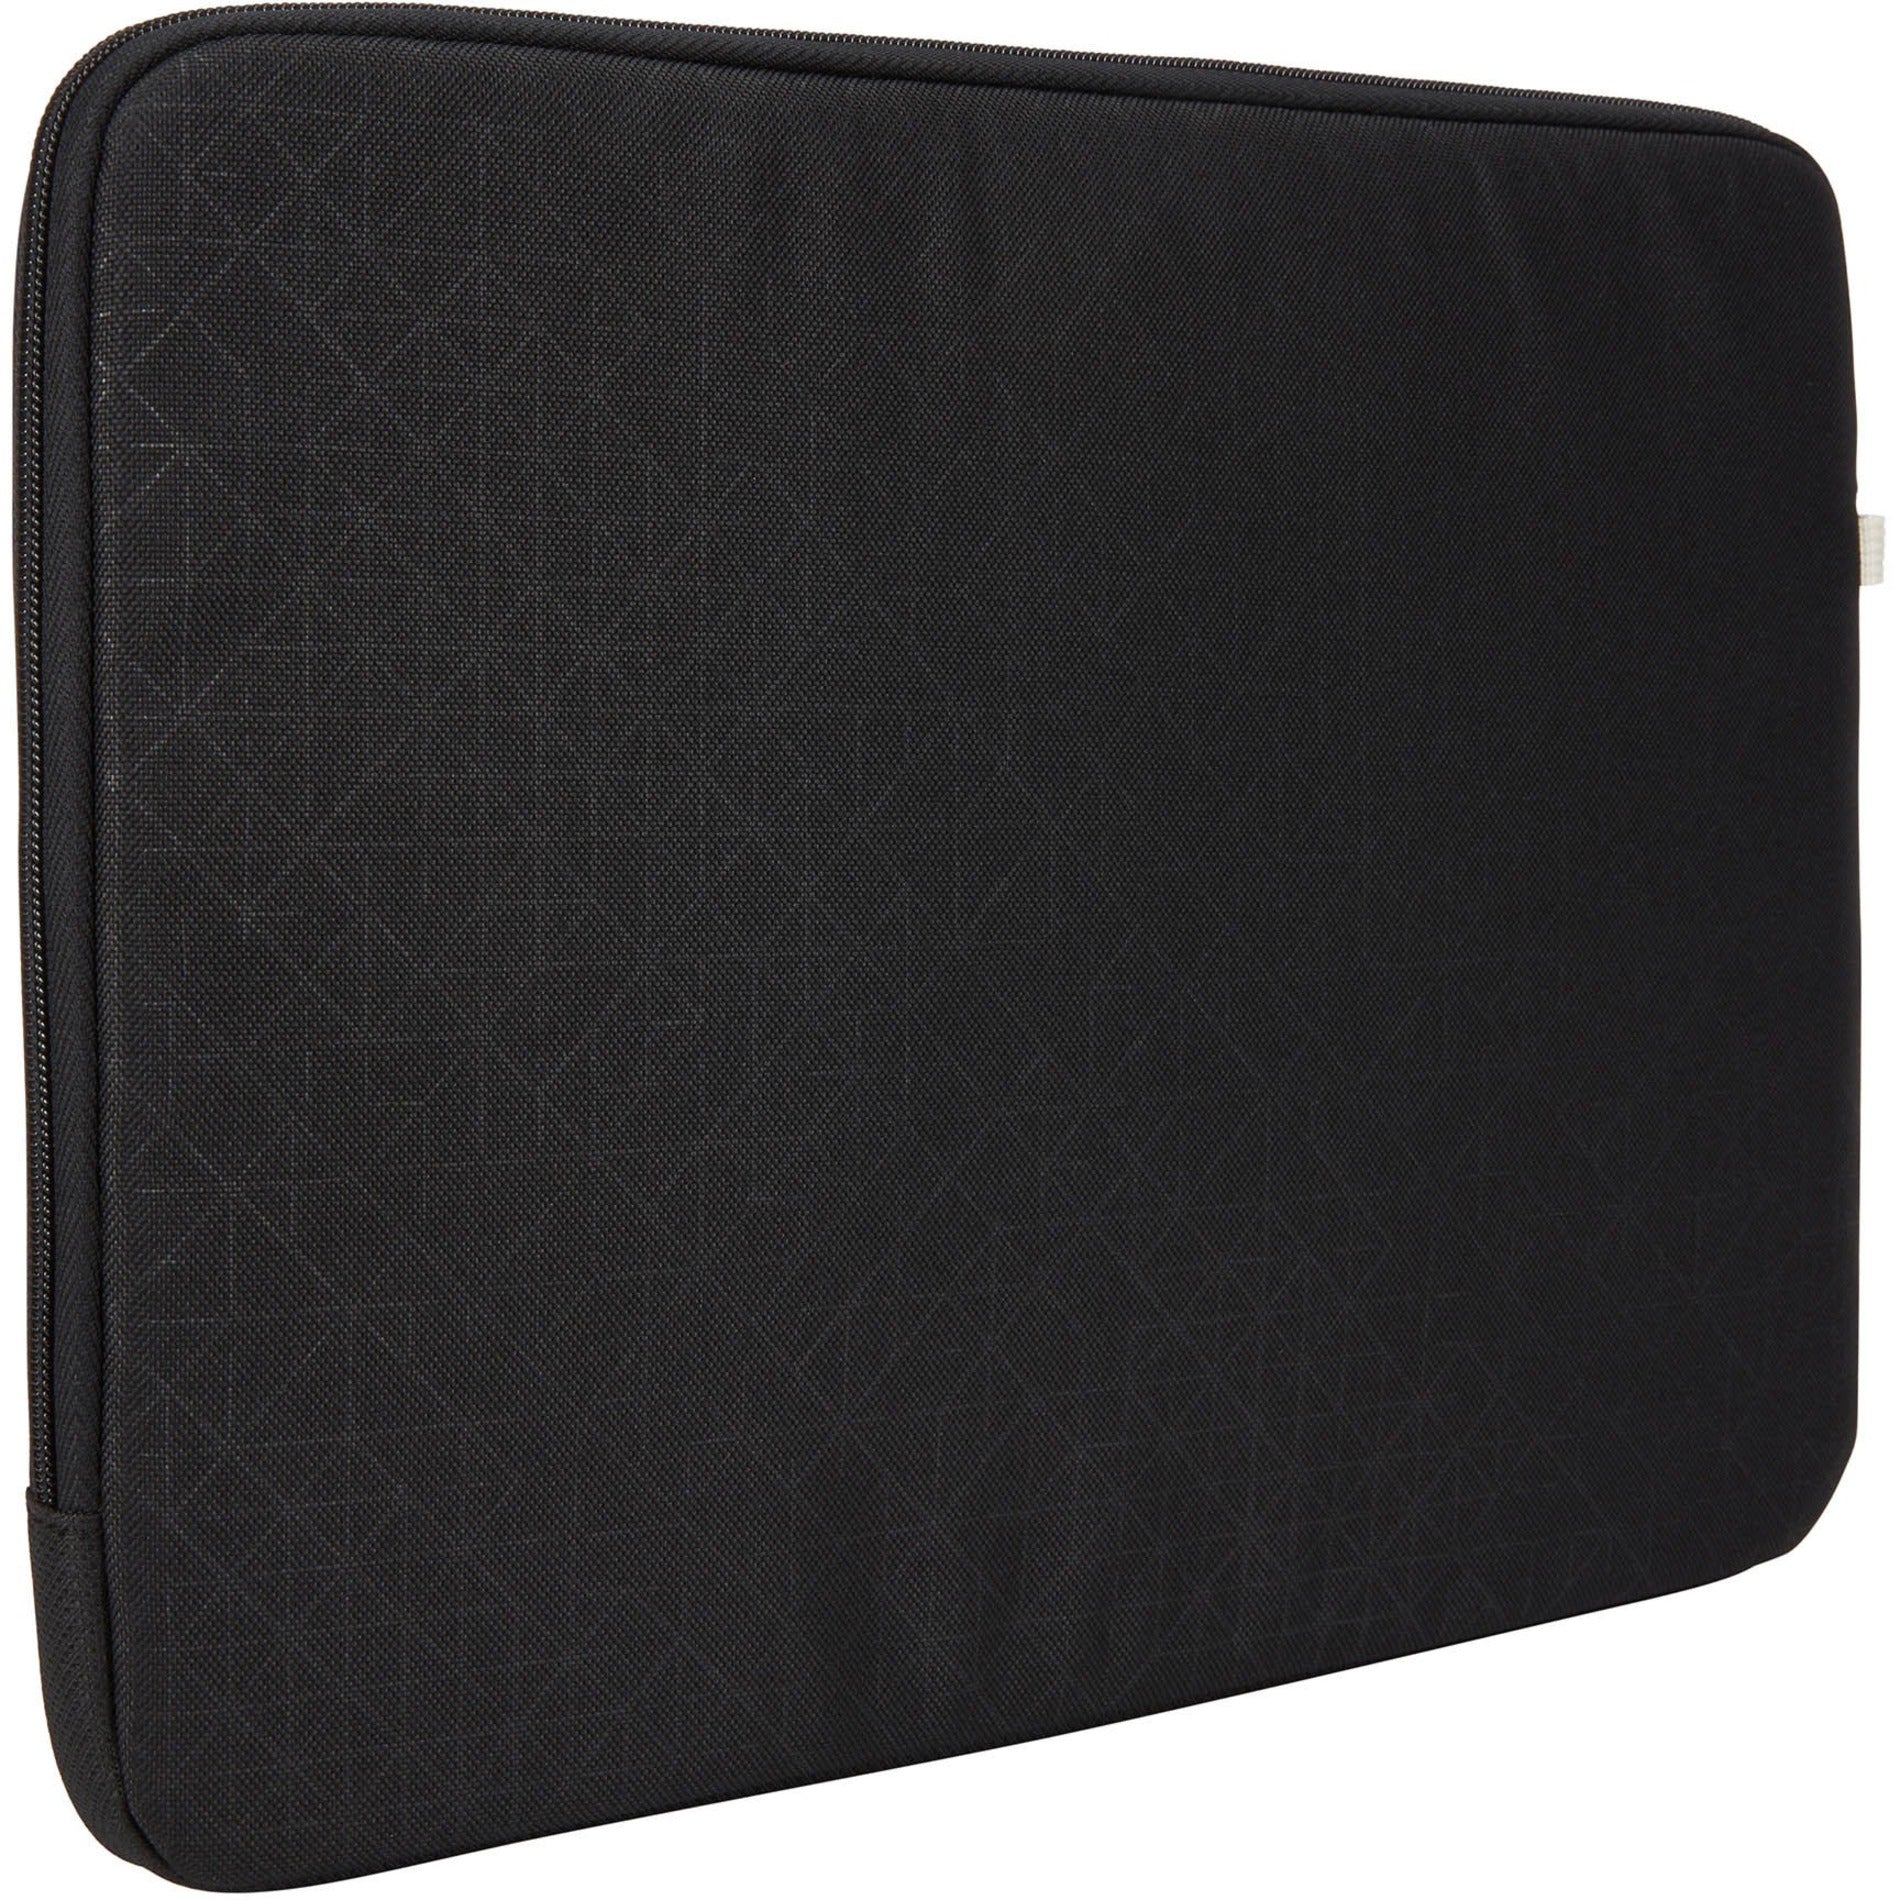 Case Logic 3204393 Ibira 14" Laptop Sleeve, Black, Zipper Closure, Lightweight Polyester Material